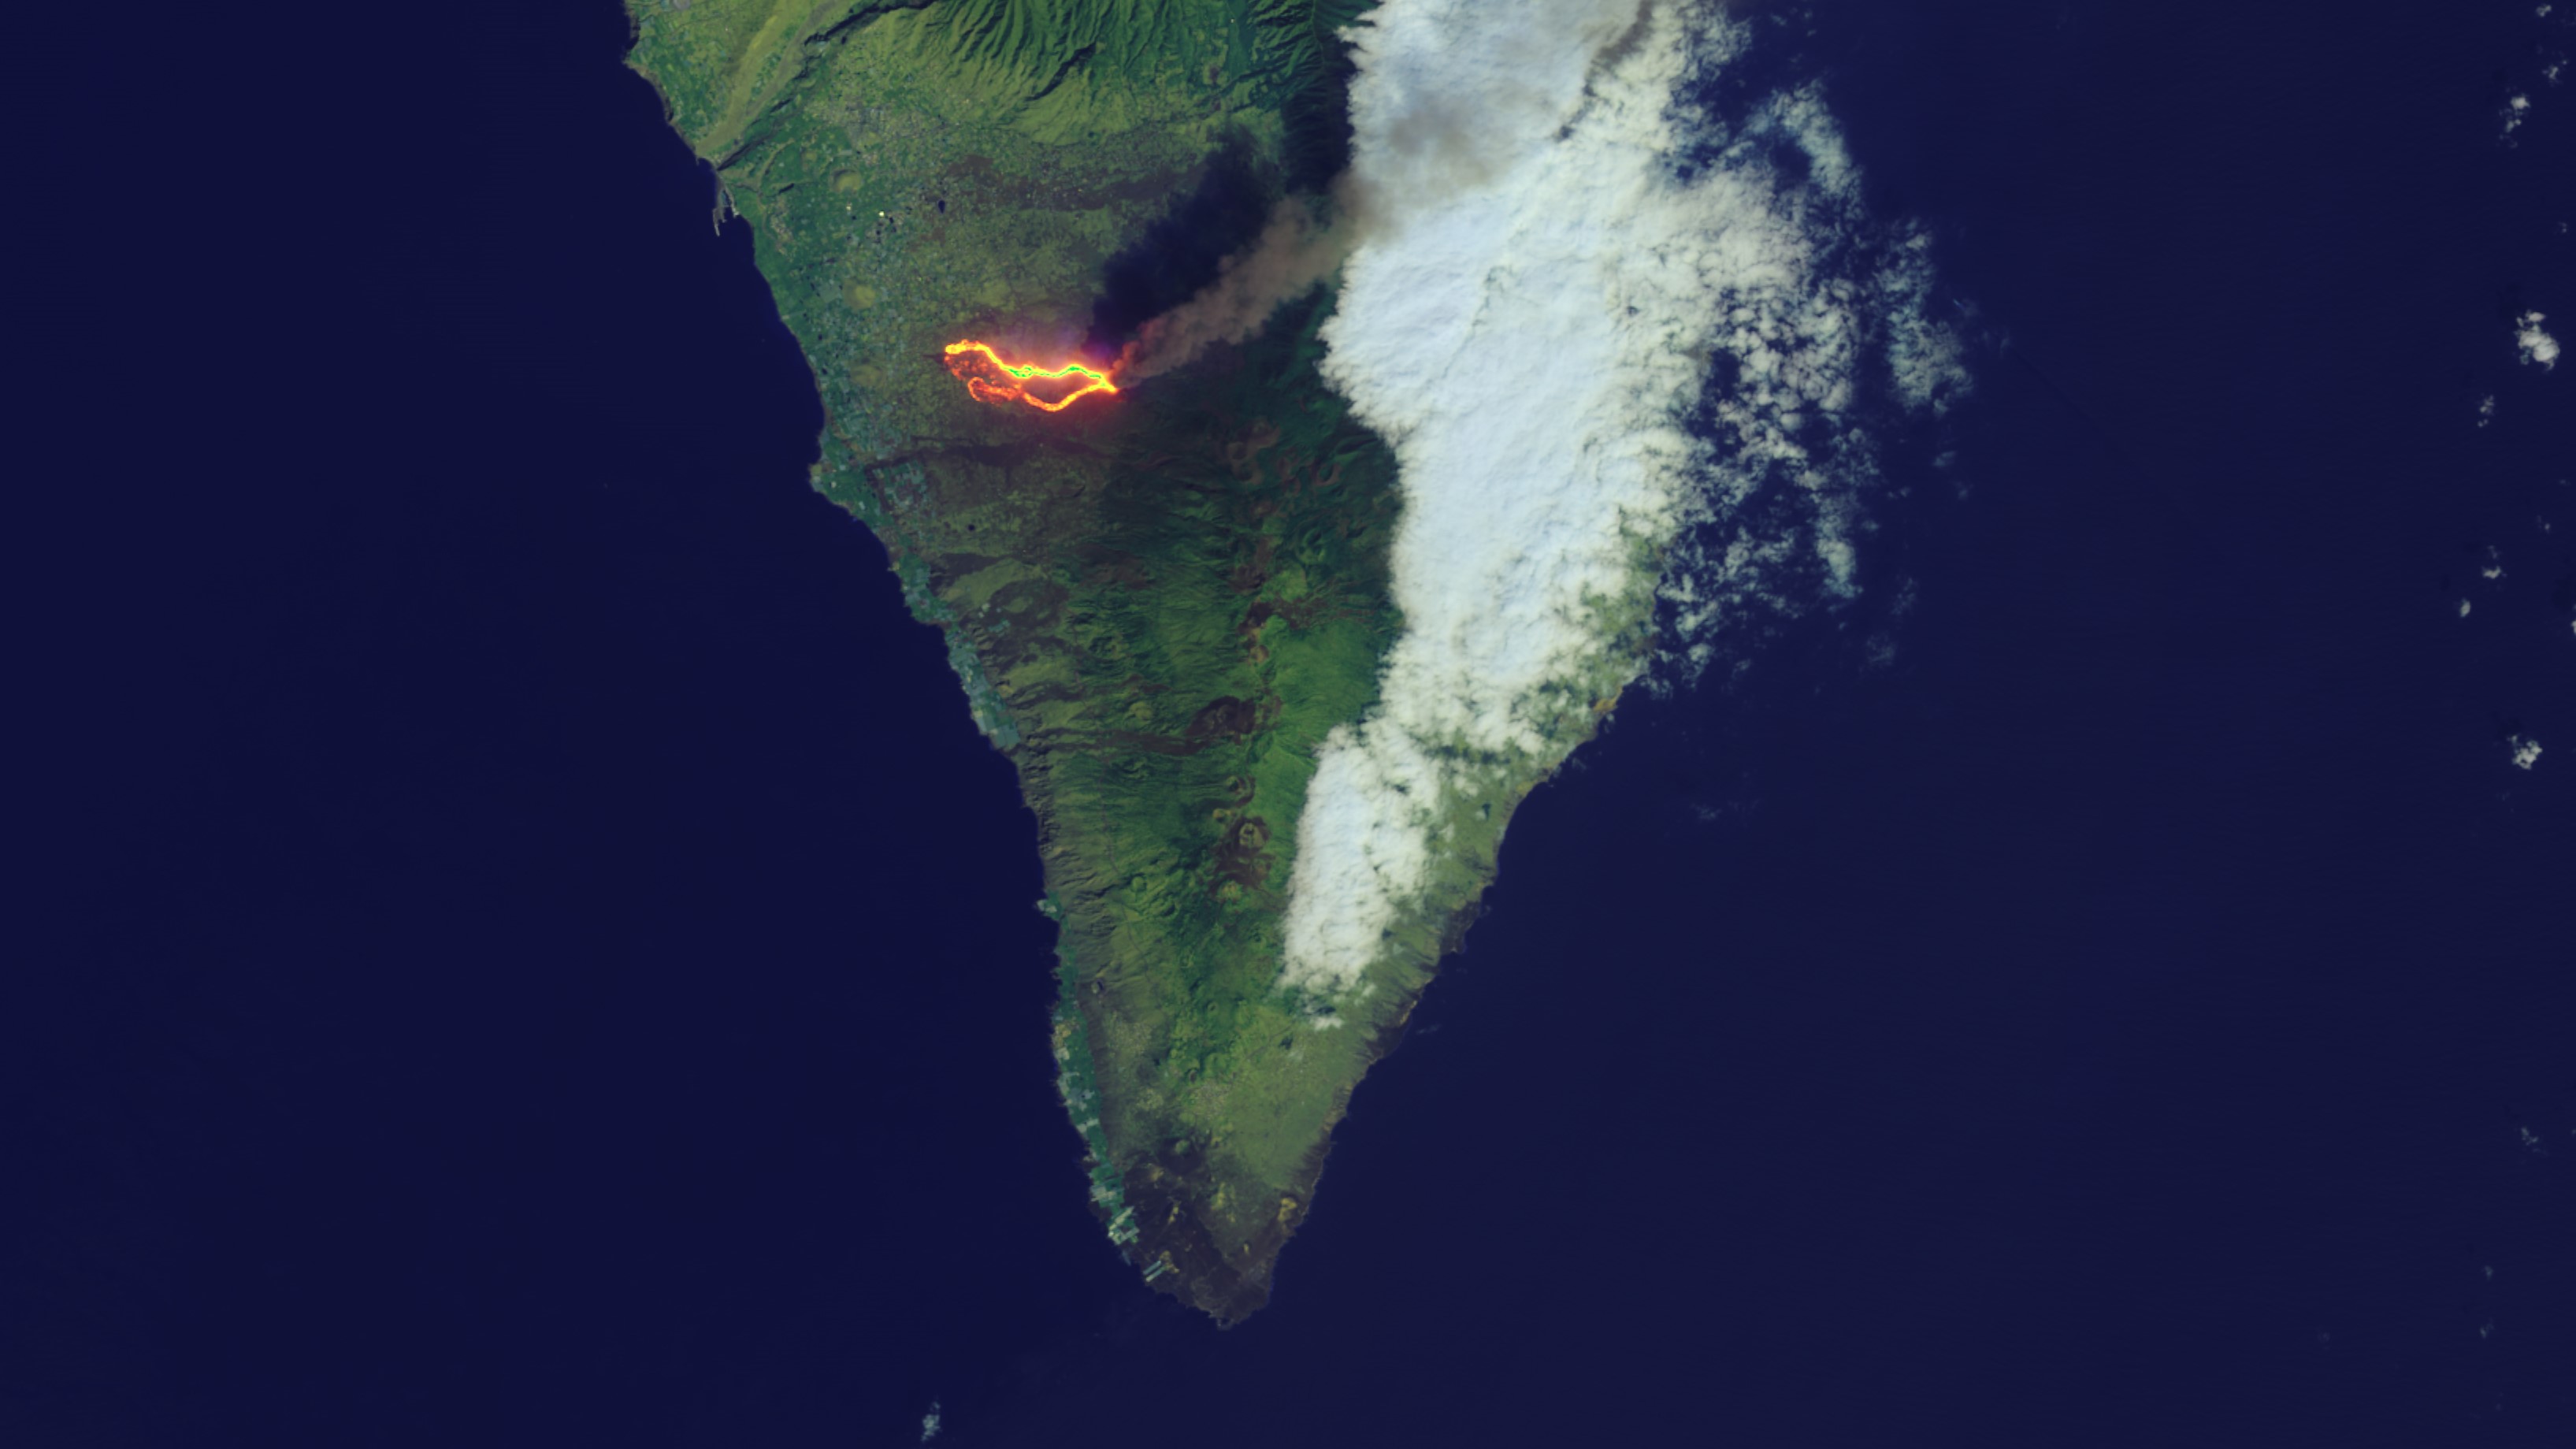 Bright lava flows, smoke pour from La Palma volcano eruption in new Landsat photos thumbnail